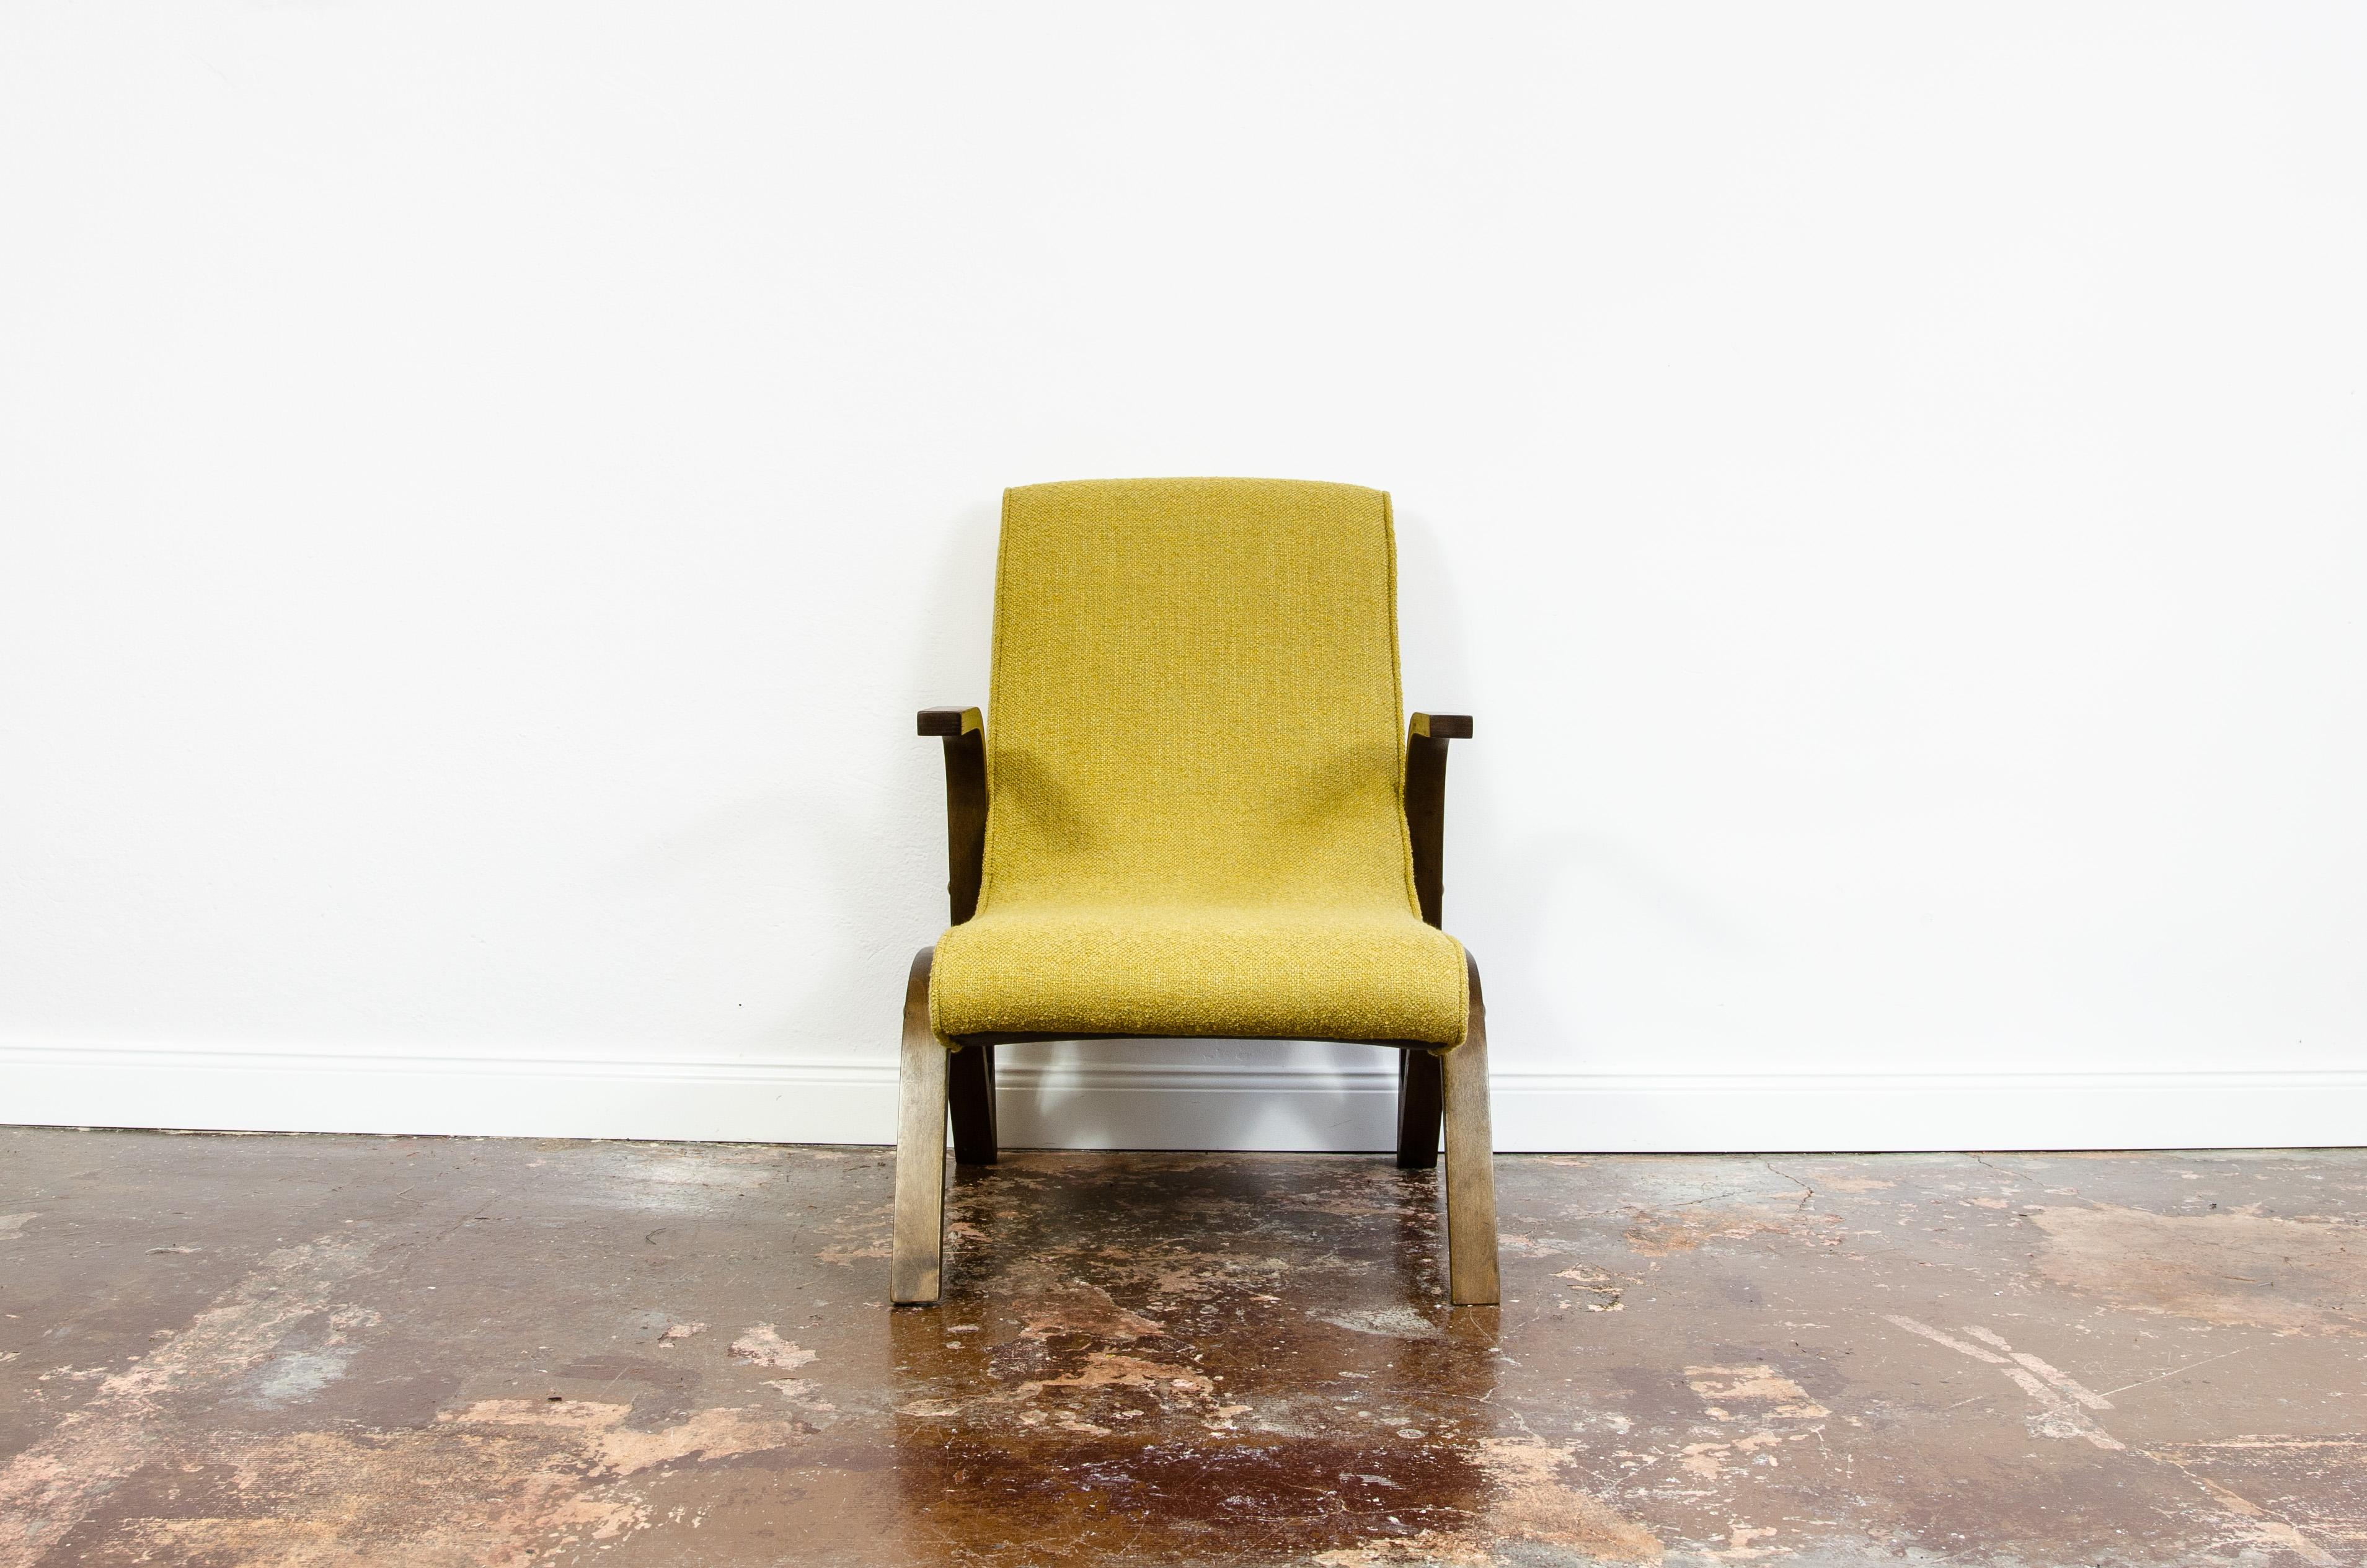 Yellow Konkav armchair by Paul Bode for Deutsche Federholzgesellschaft, 1950s Germany.

